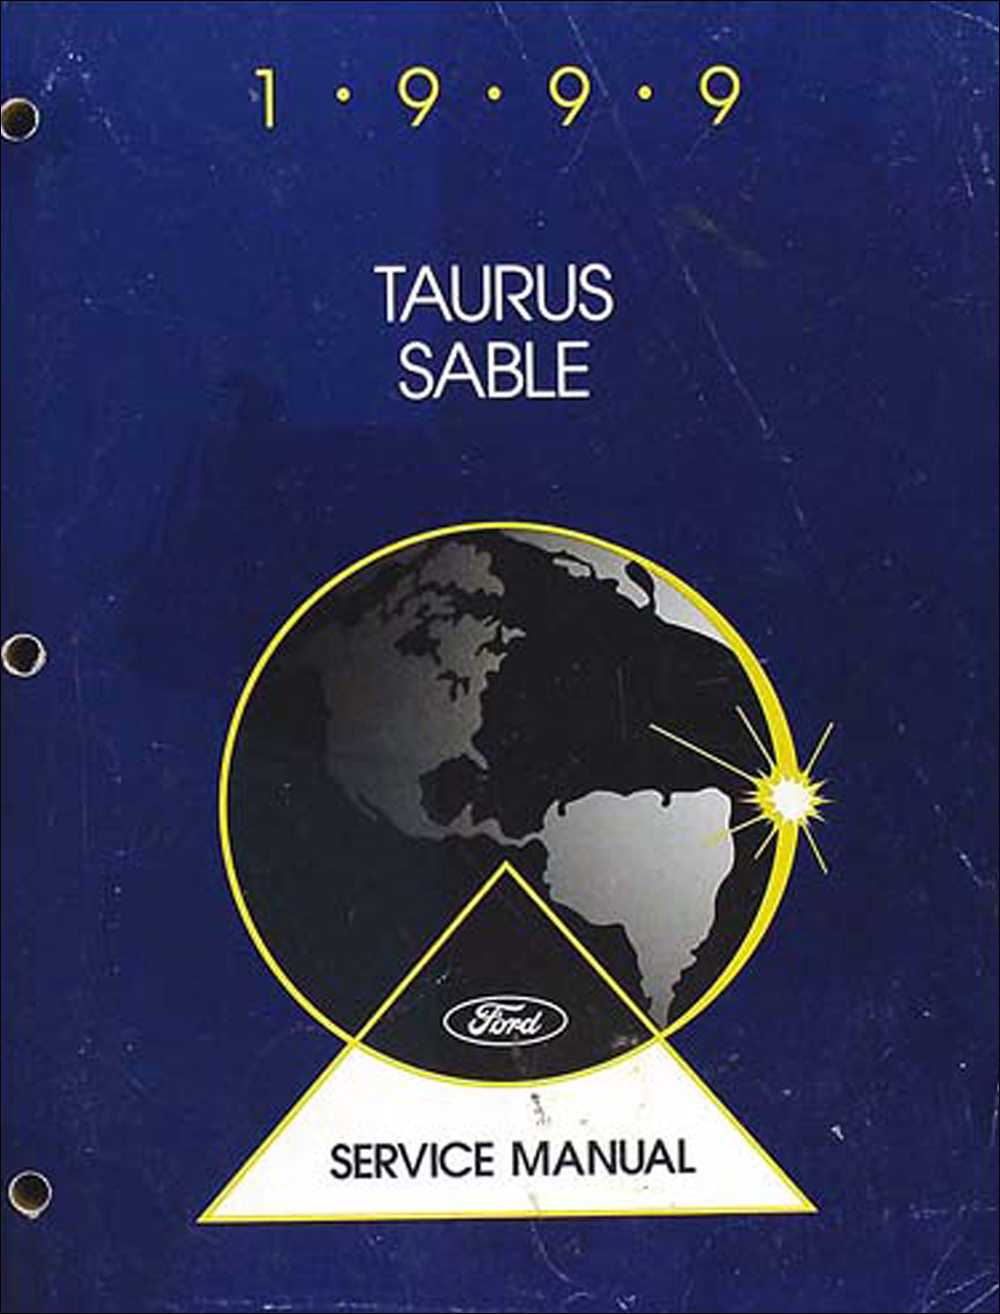 1999 Ford Taurus and Mercury Sable Shop Manual Original